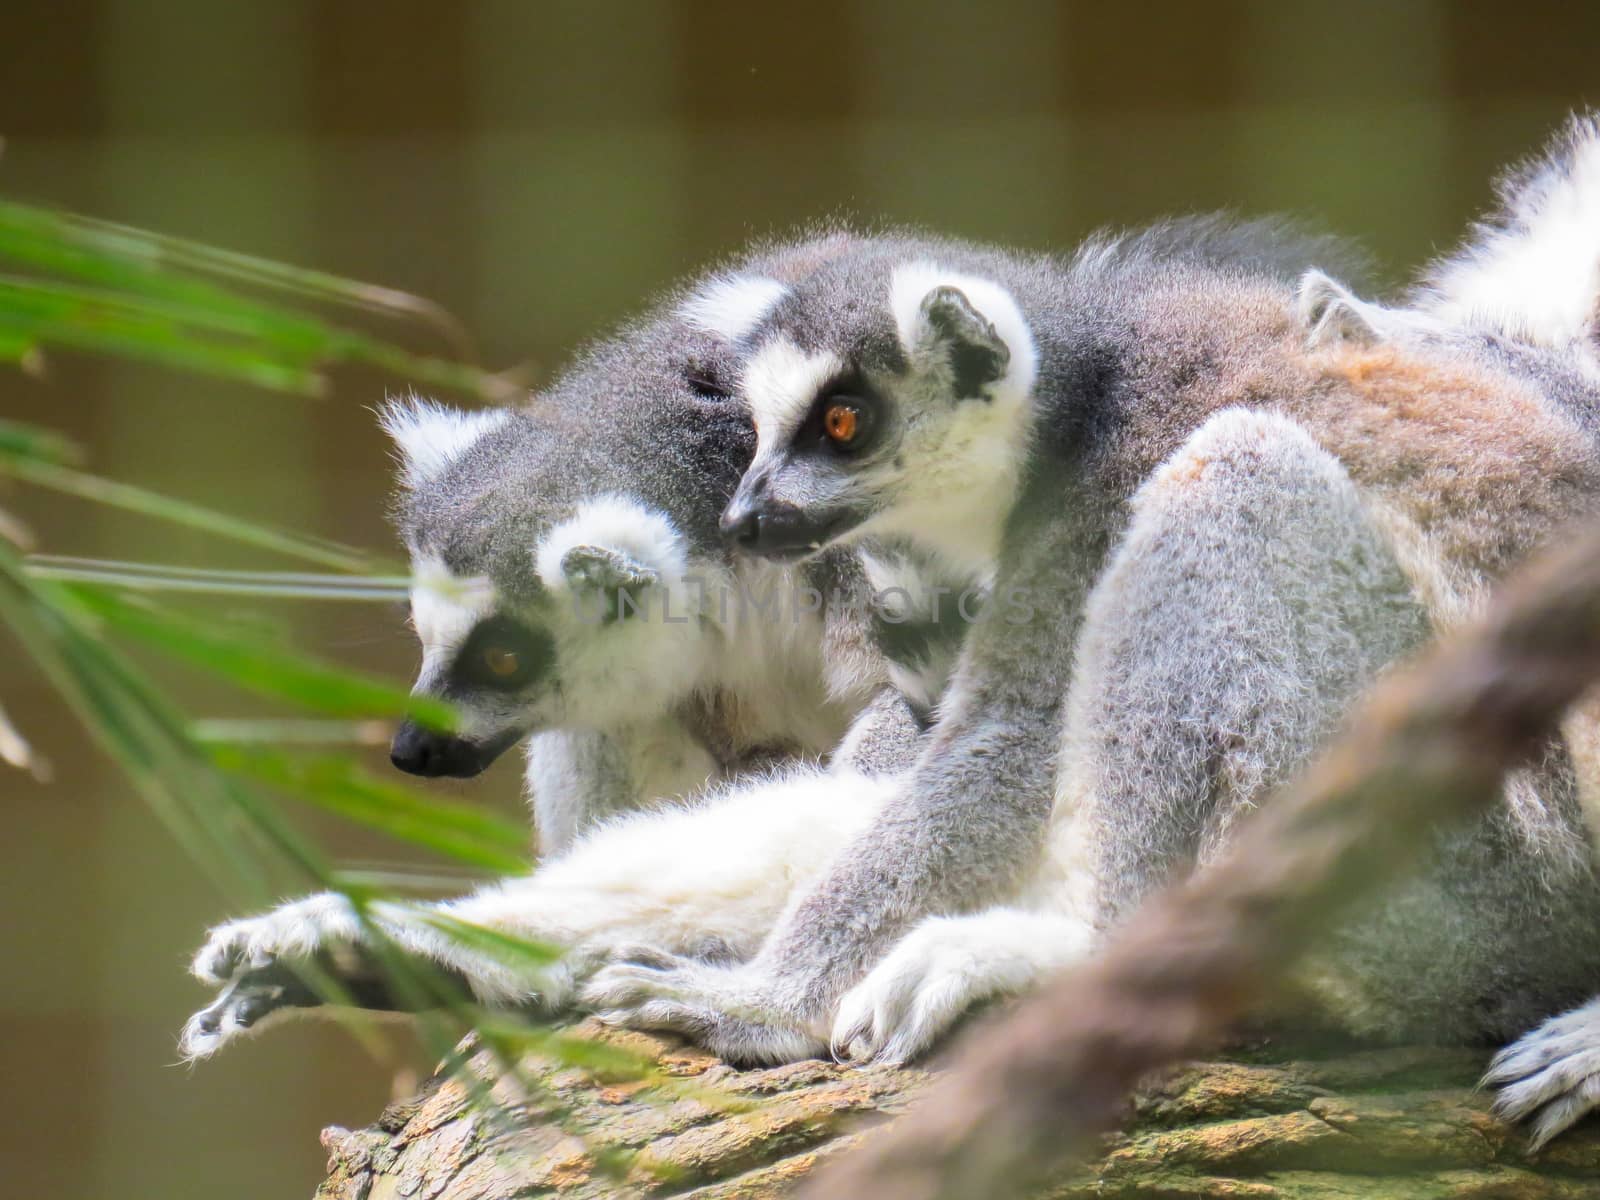 Exemplary of Madagascar wildlife. Lemurs sitting on tree in alert position